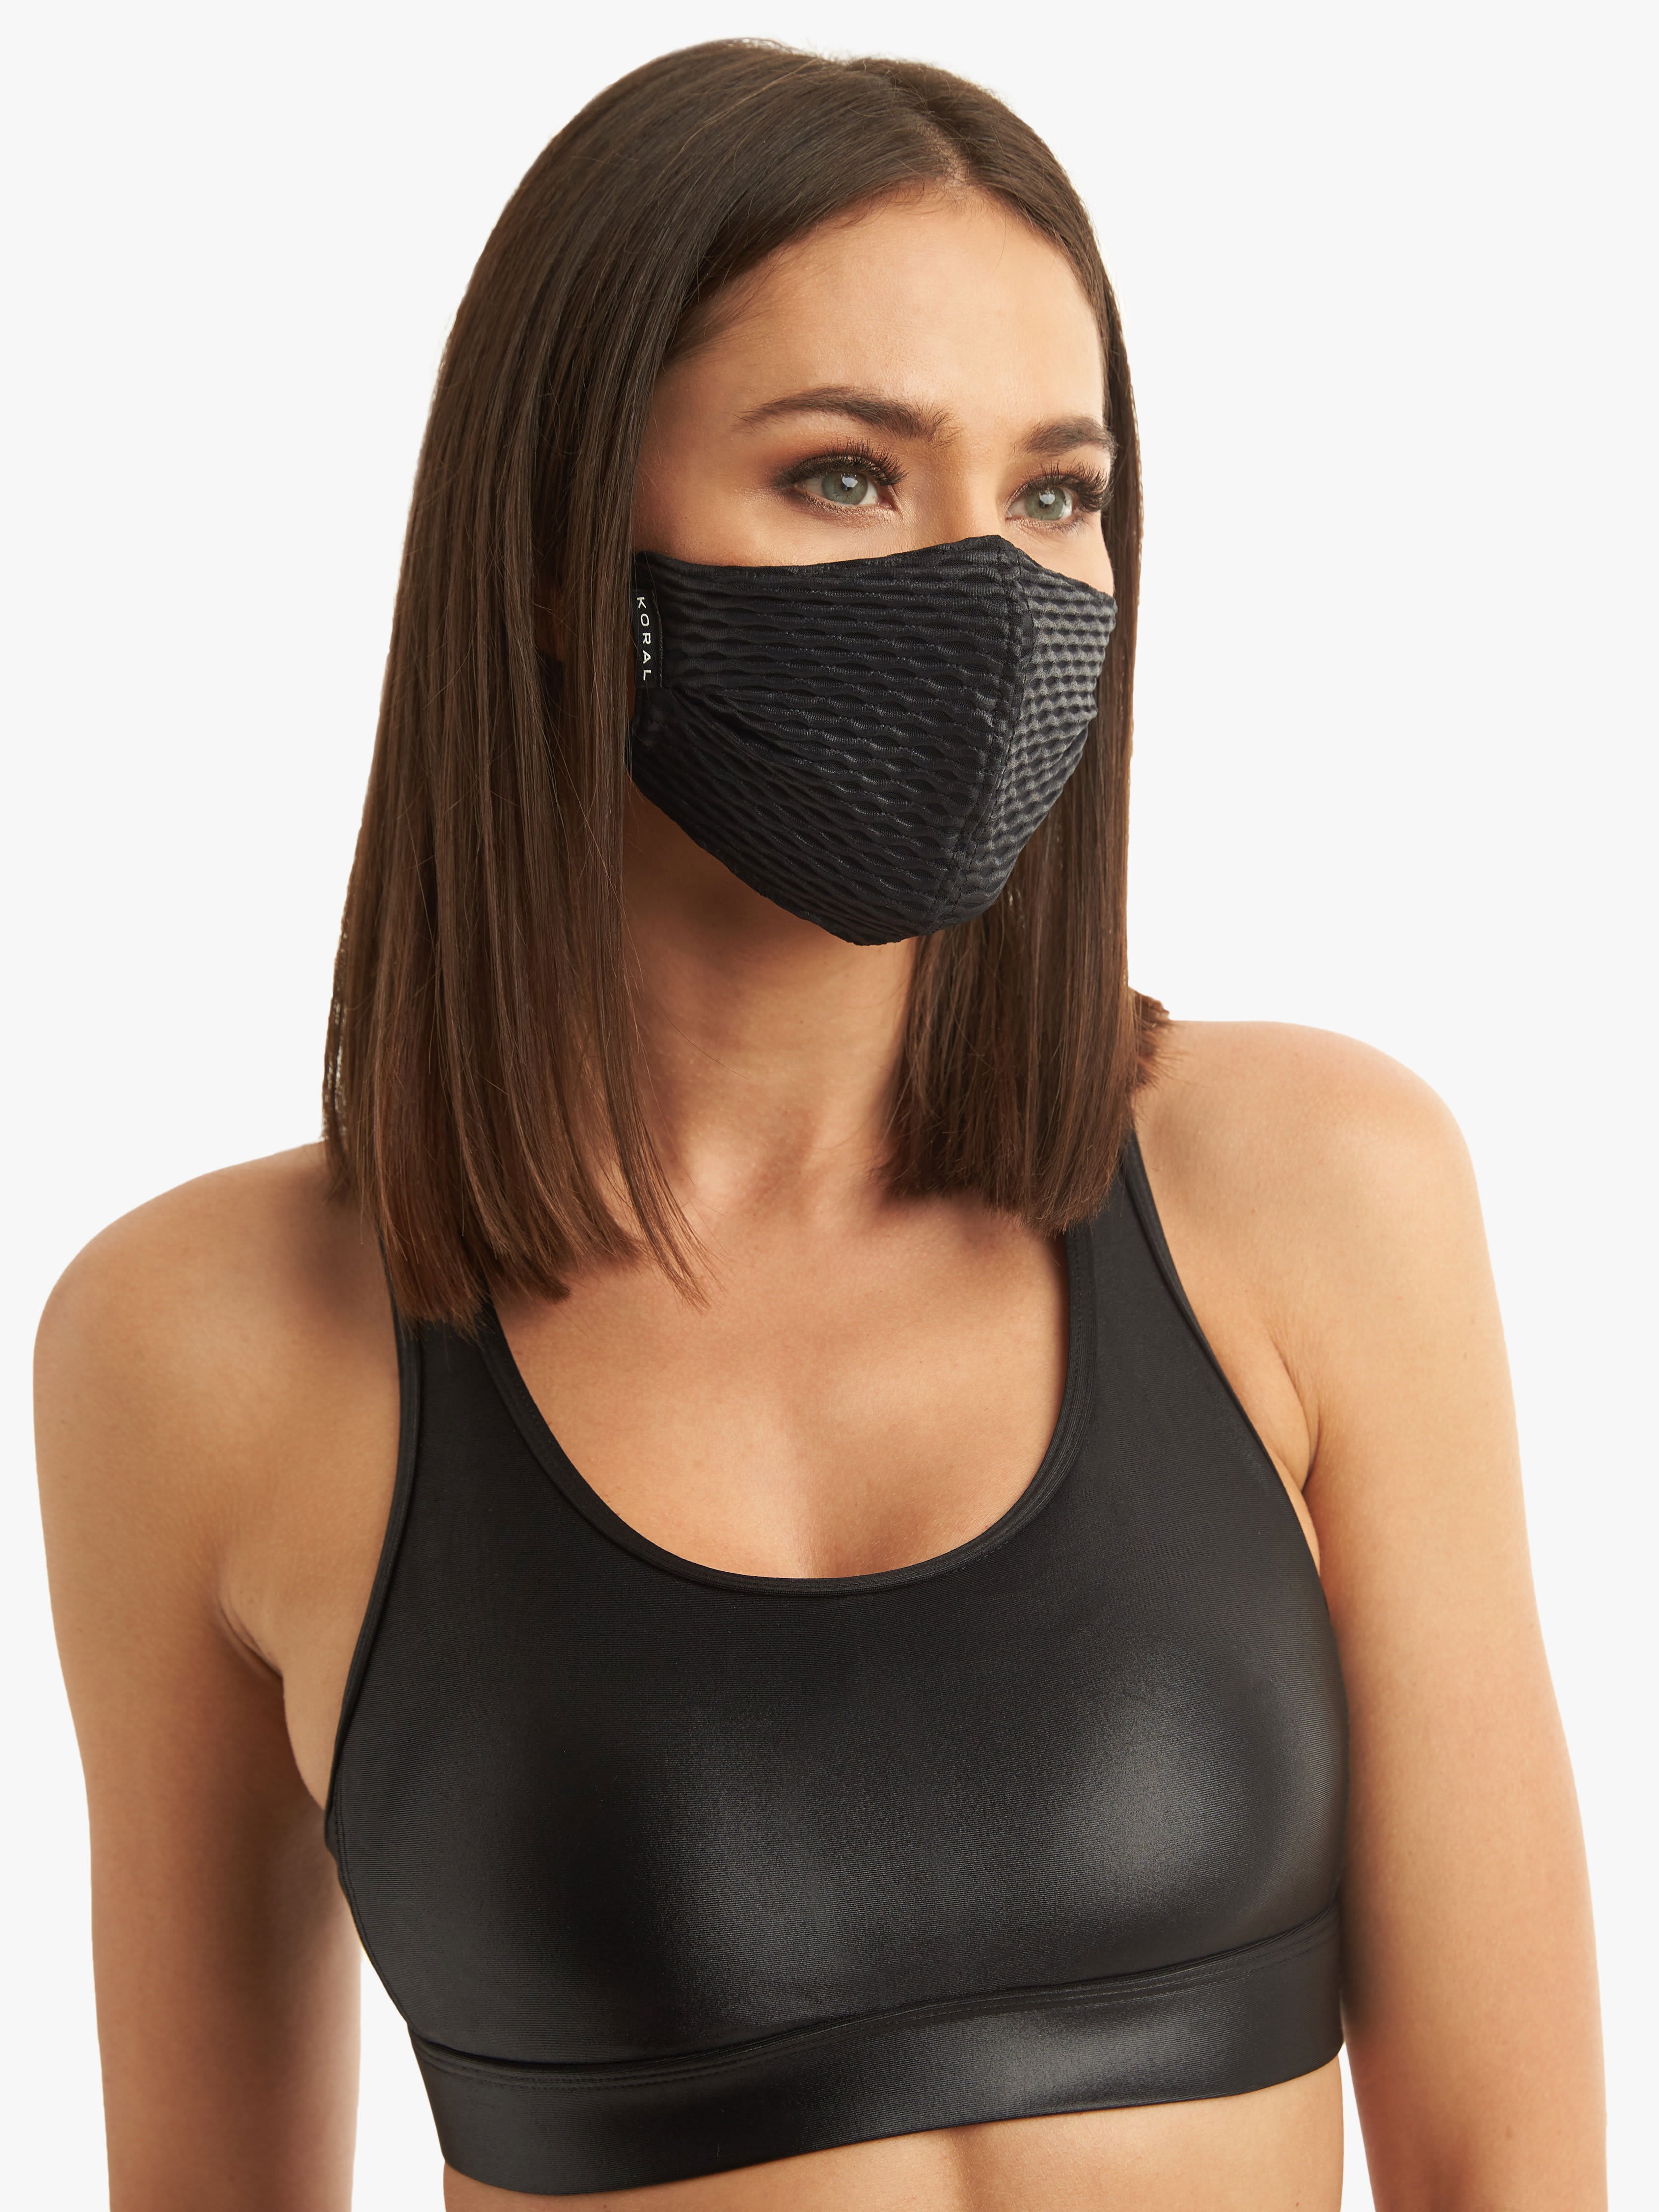 dug fugtighed pad Face Masks for Running, Biking,and Other Workouts - Lulus.com Fashion Blog